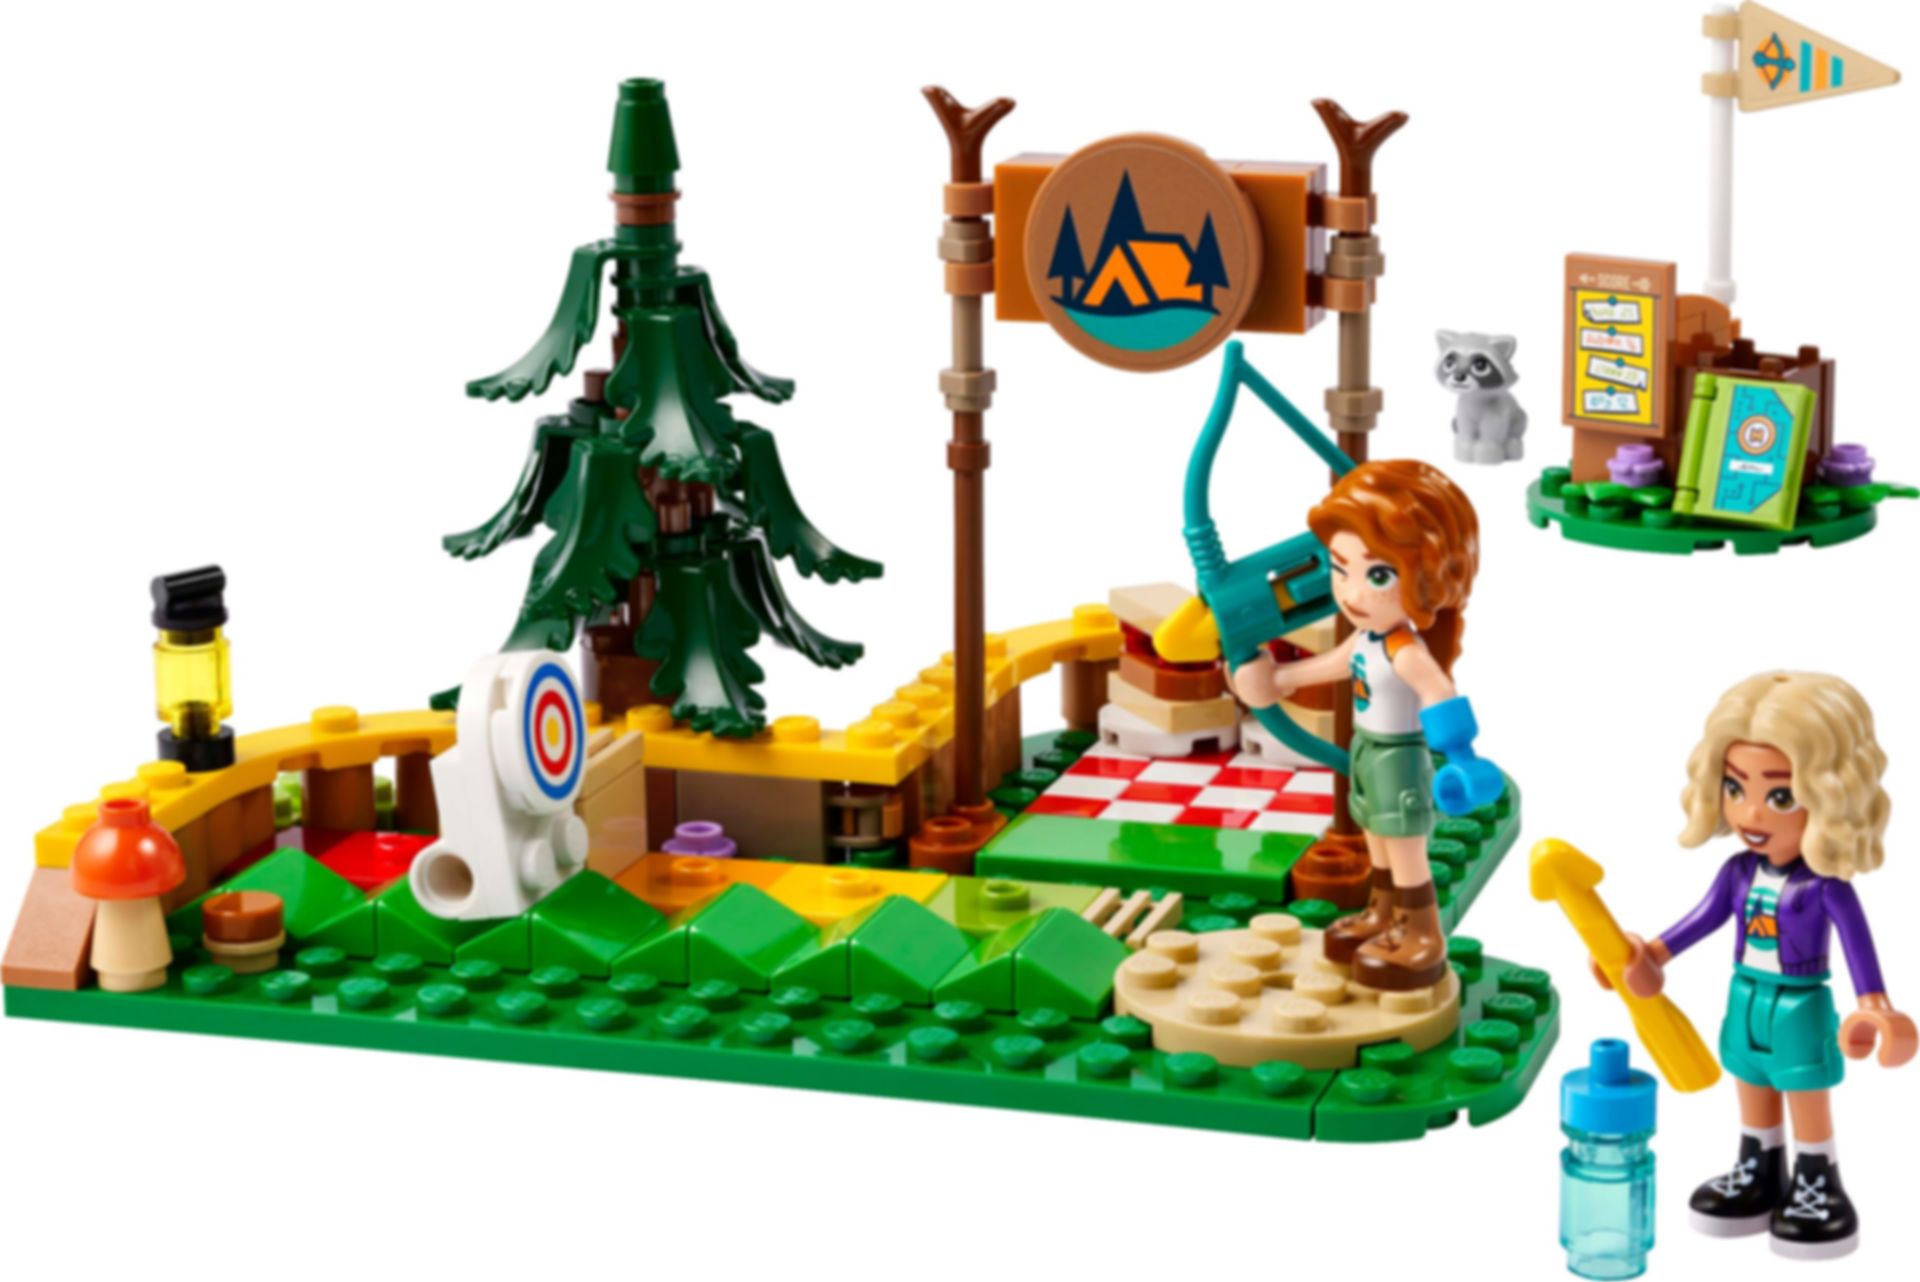 LEGO® Friends Adventure Camp Archery Range components